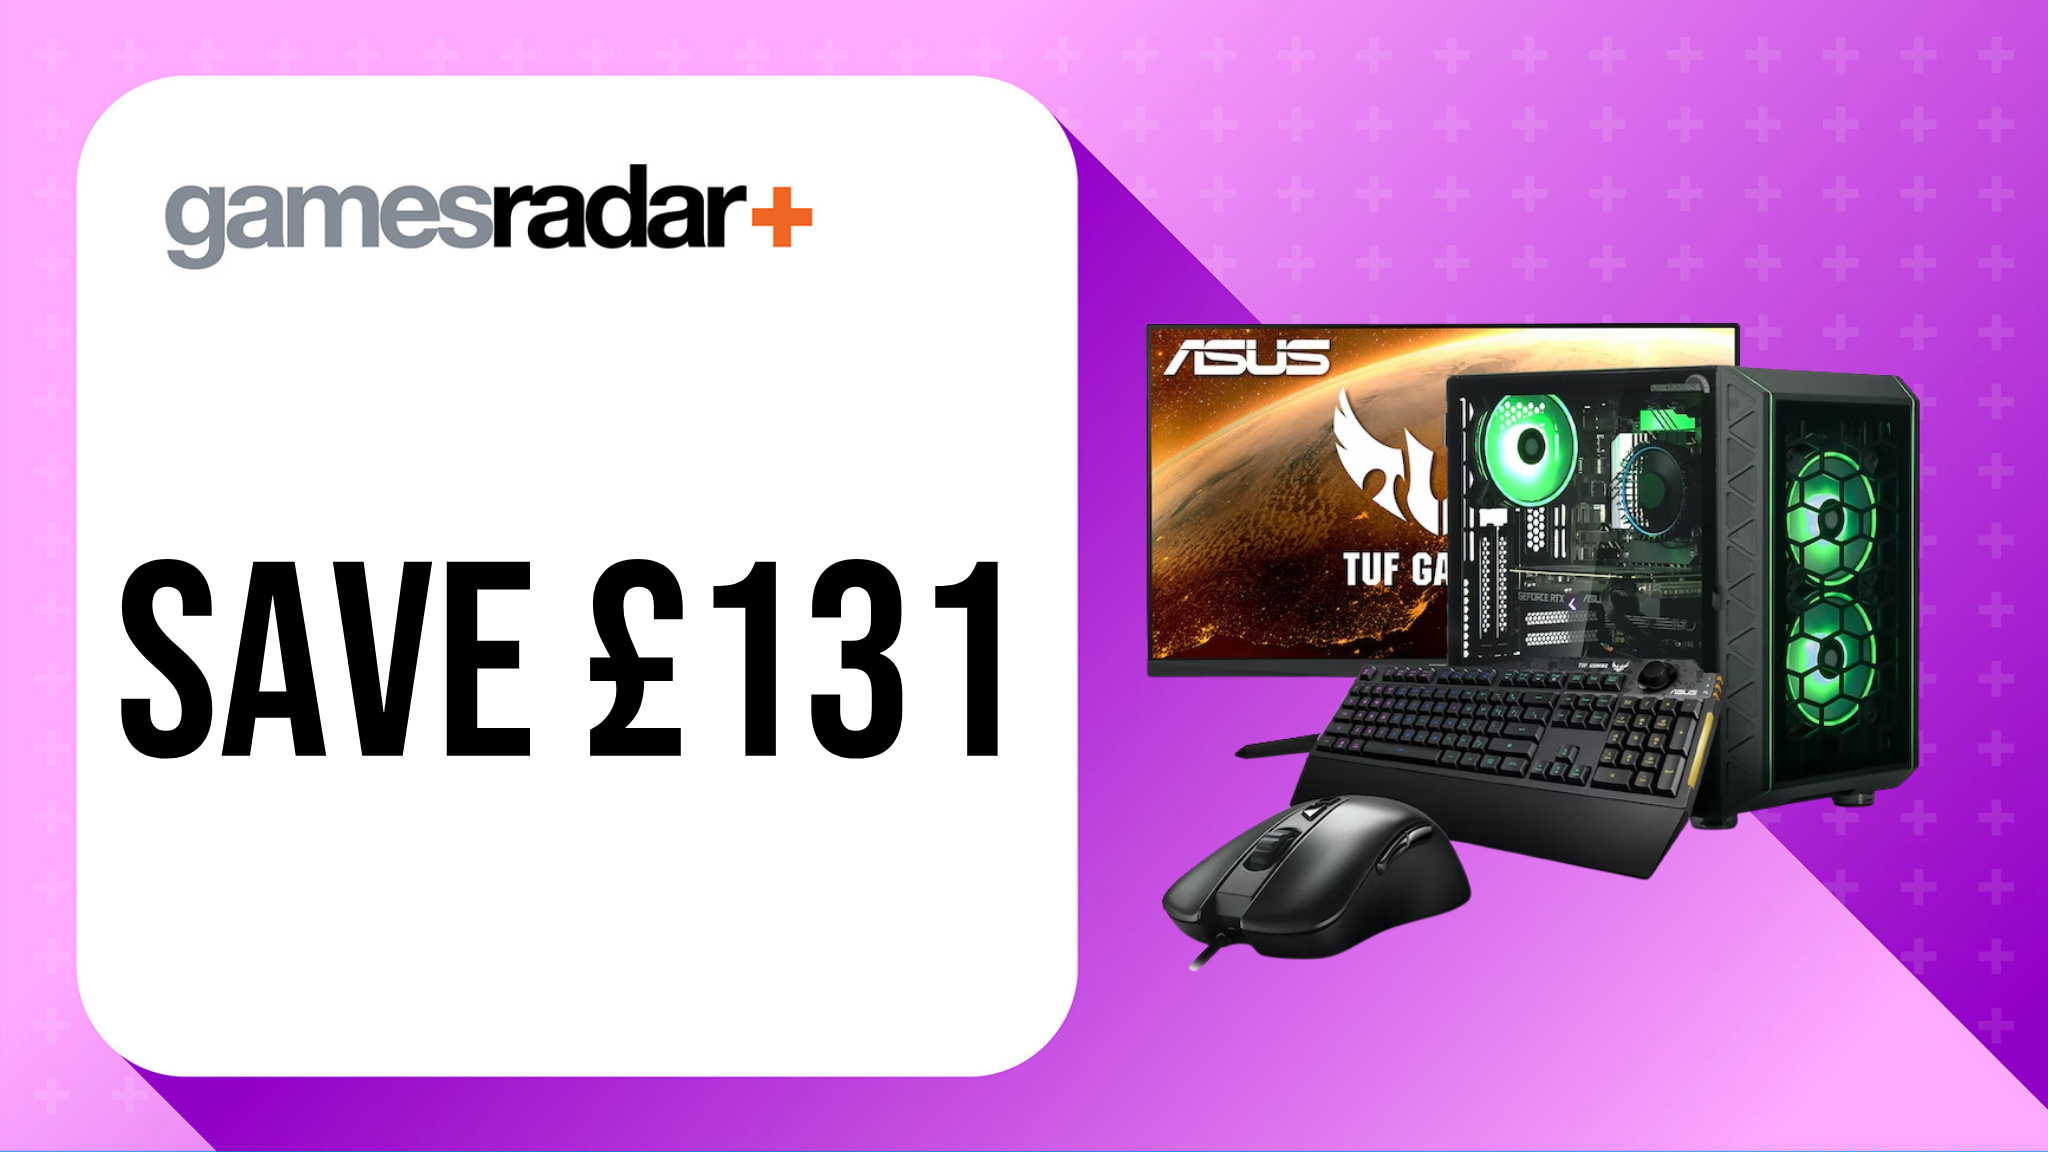 Refract Jade PC bundle deal image with £131 saving